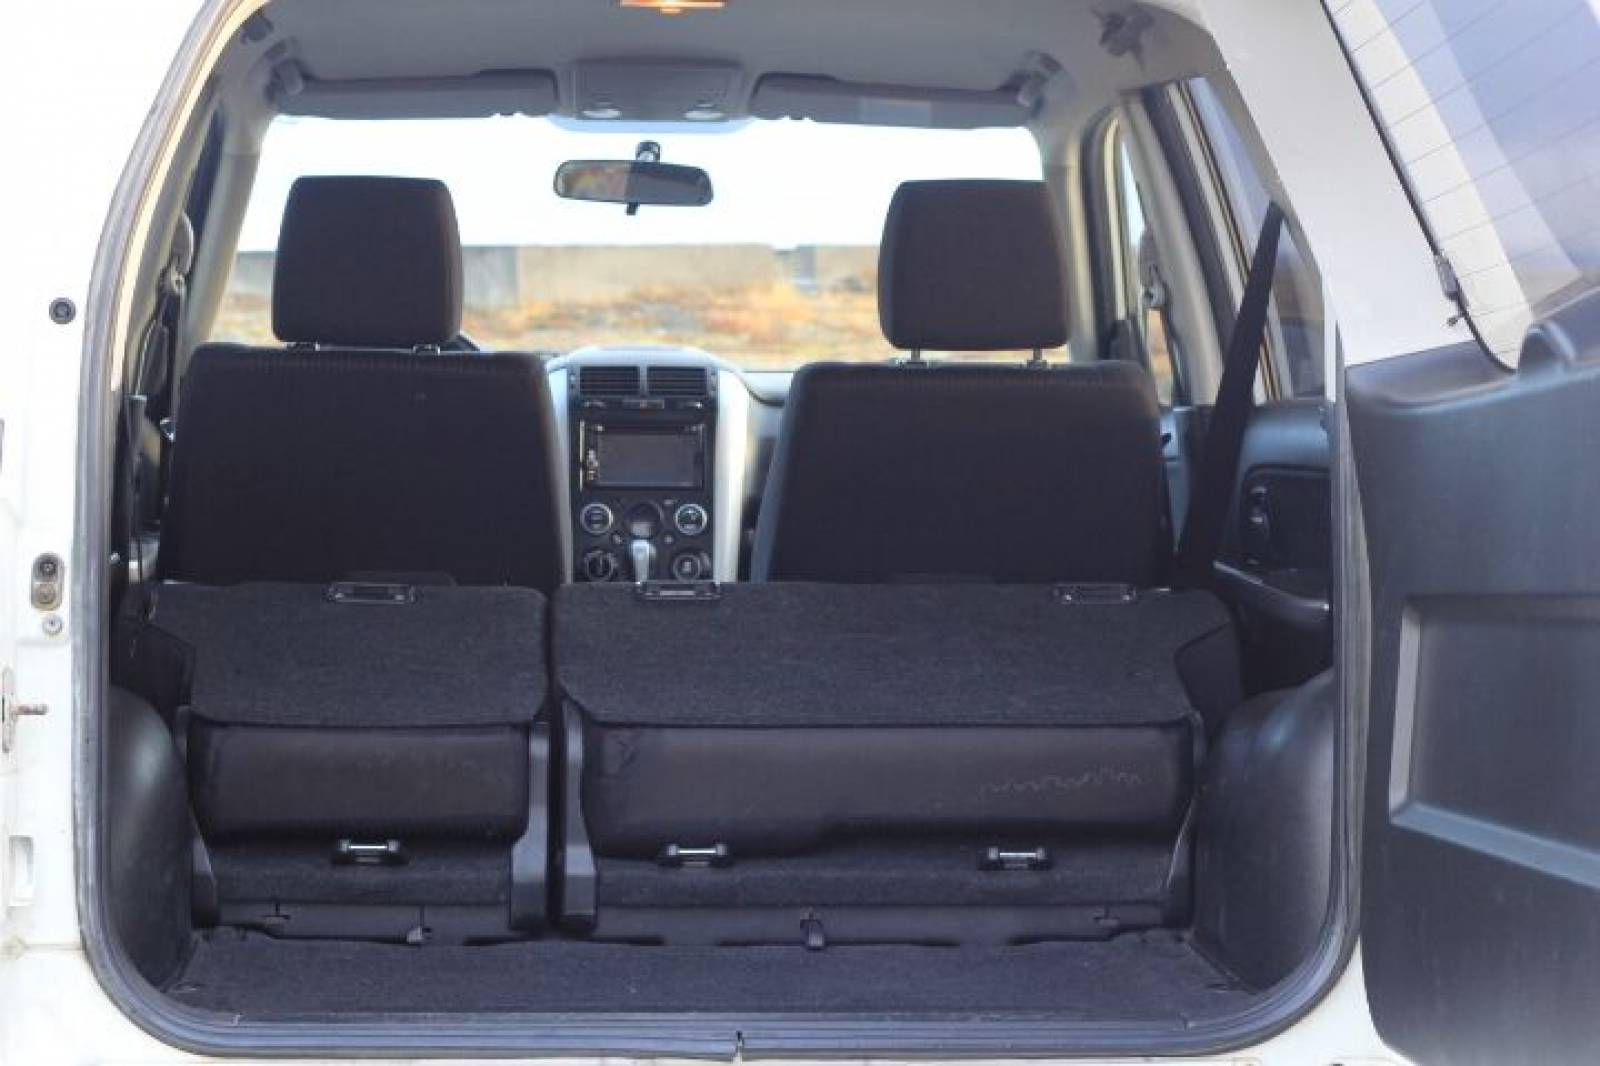 Suzuki Grand Vitara luggage space with back seats folded down